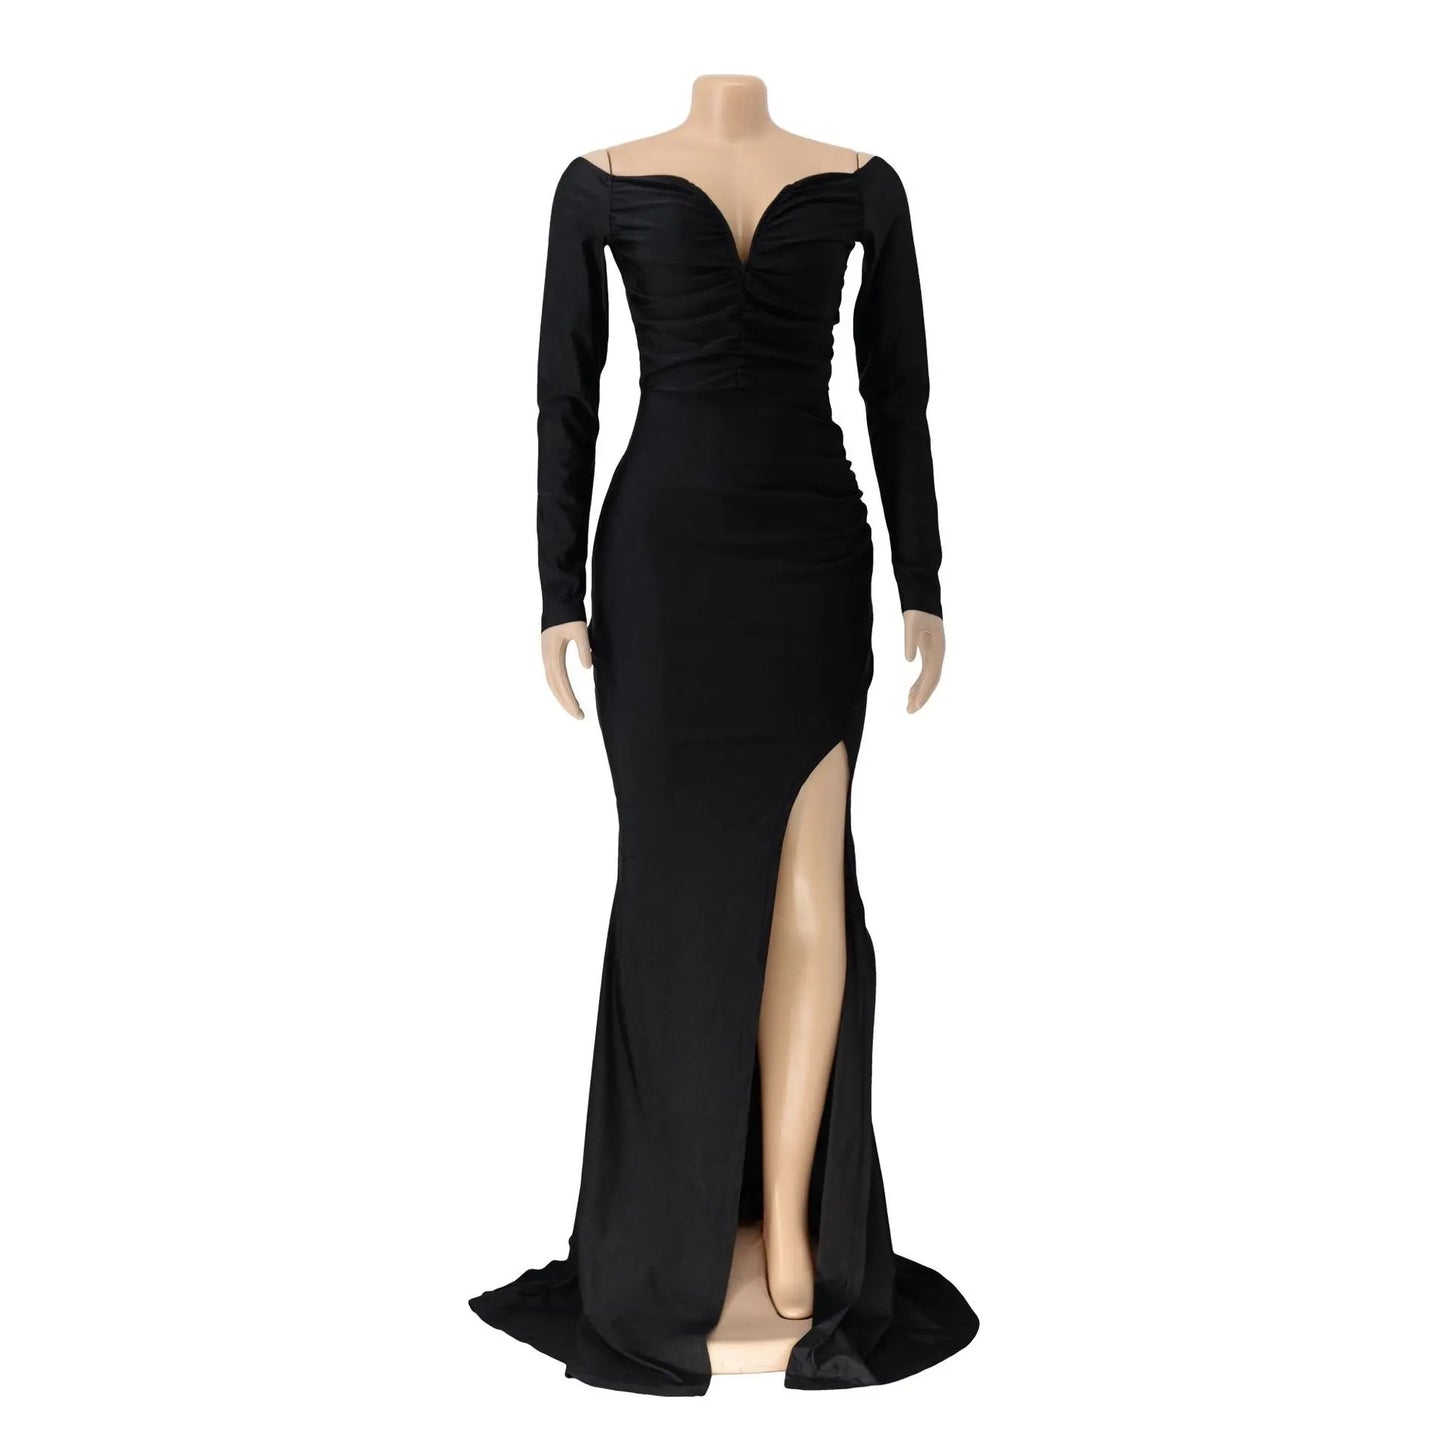 Kerry Elle Dress (Black)